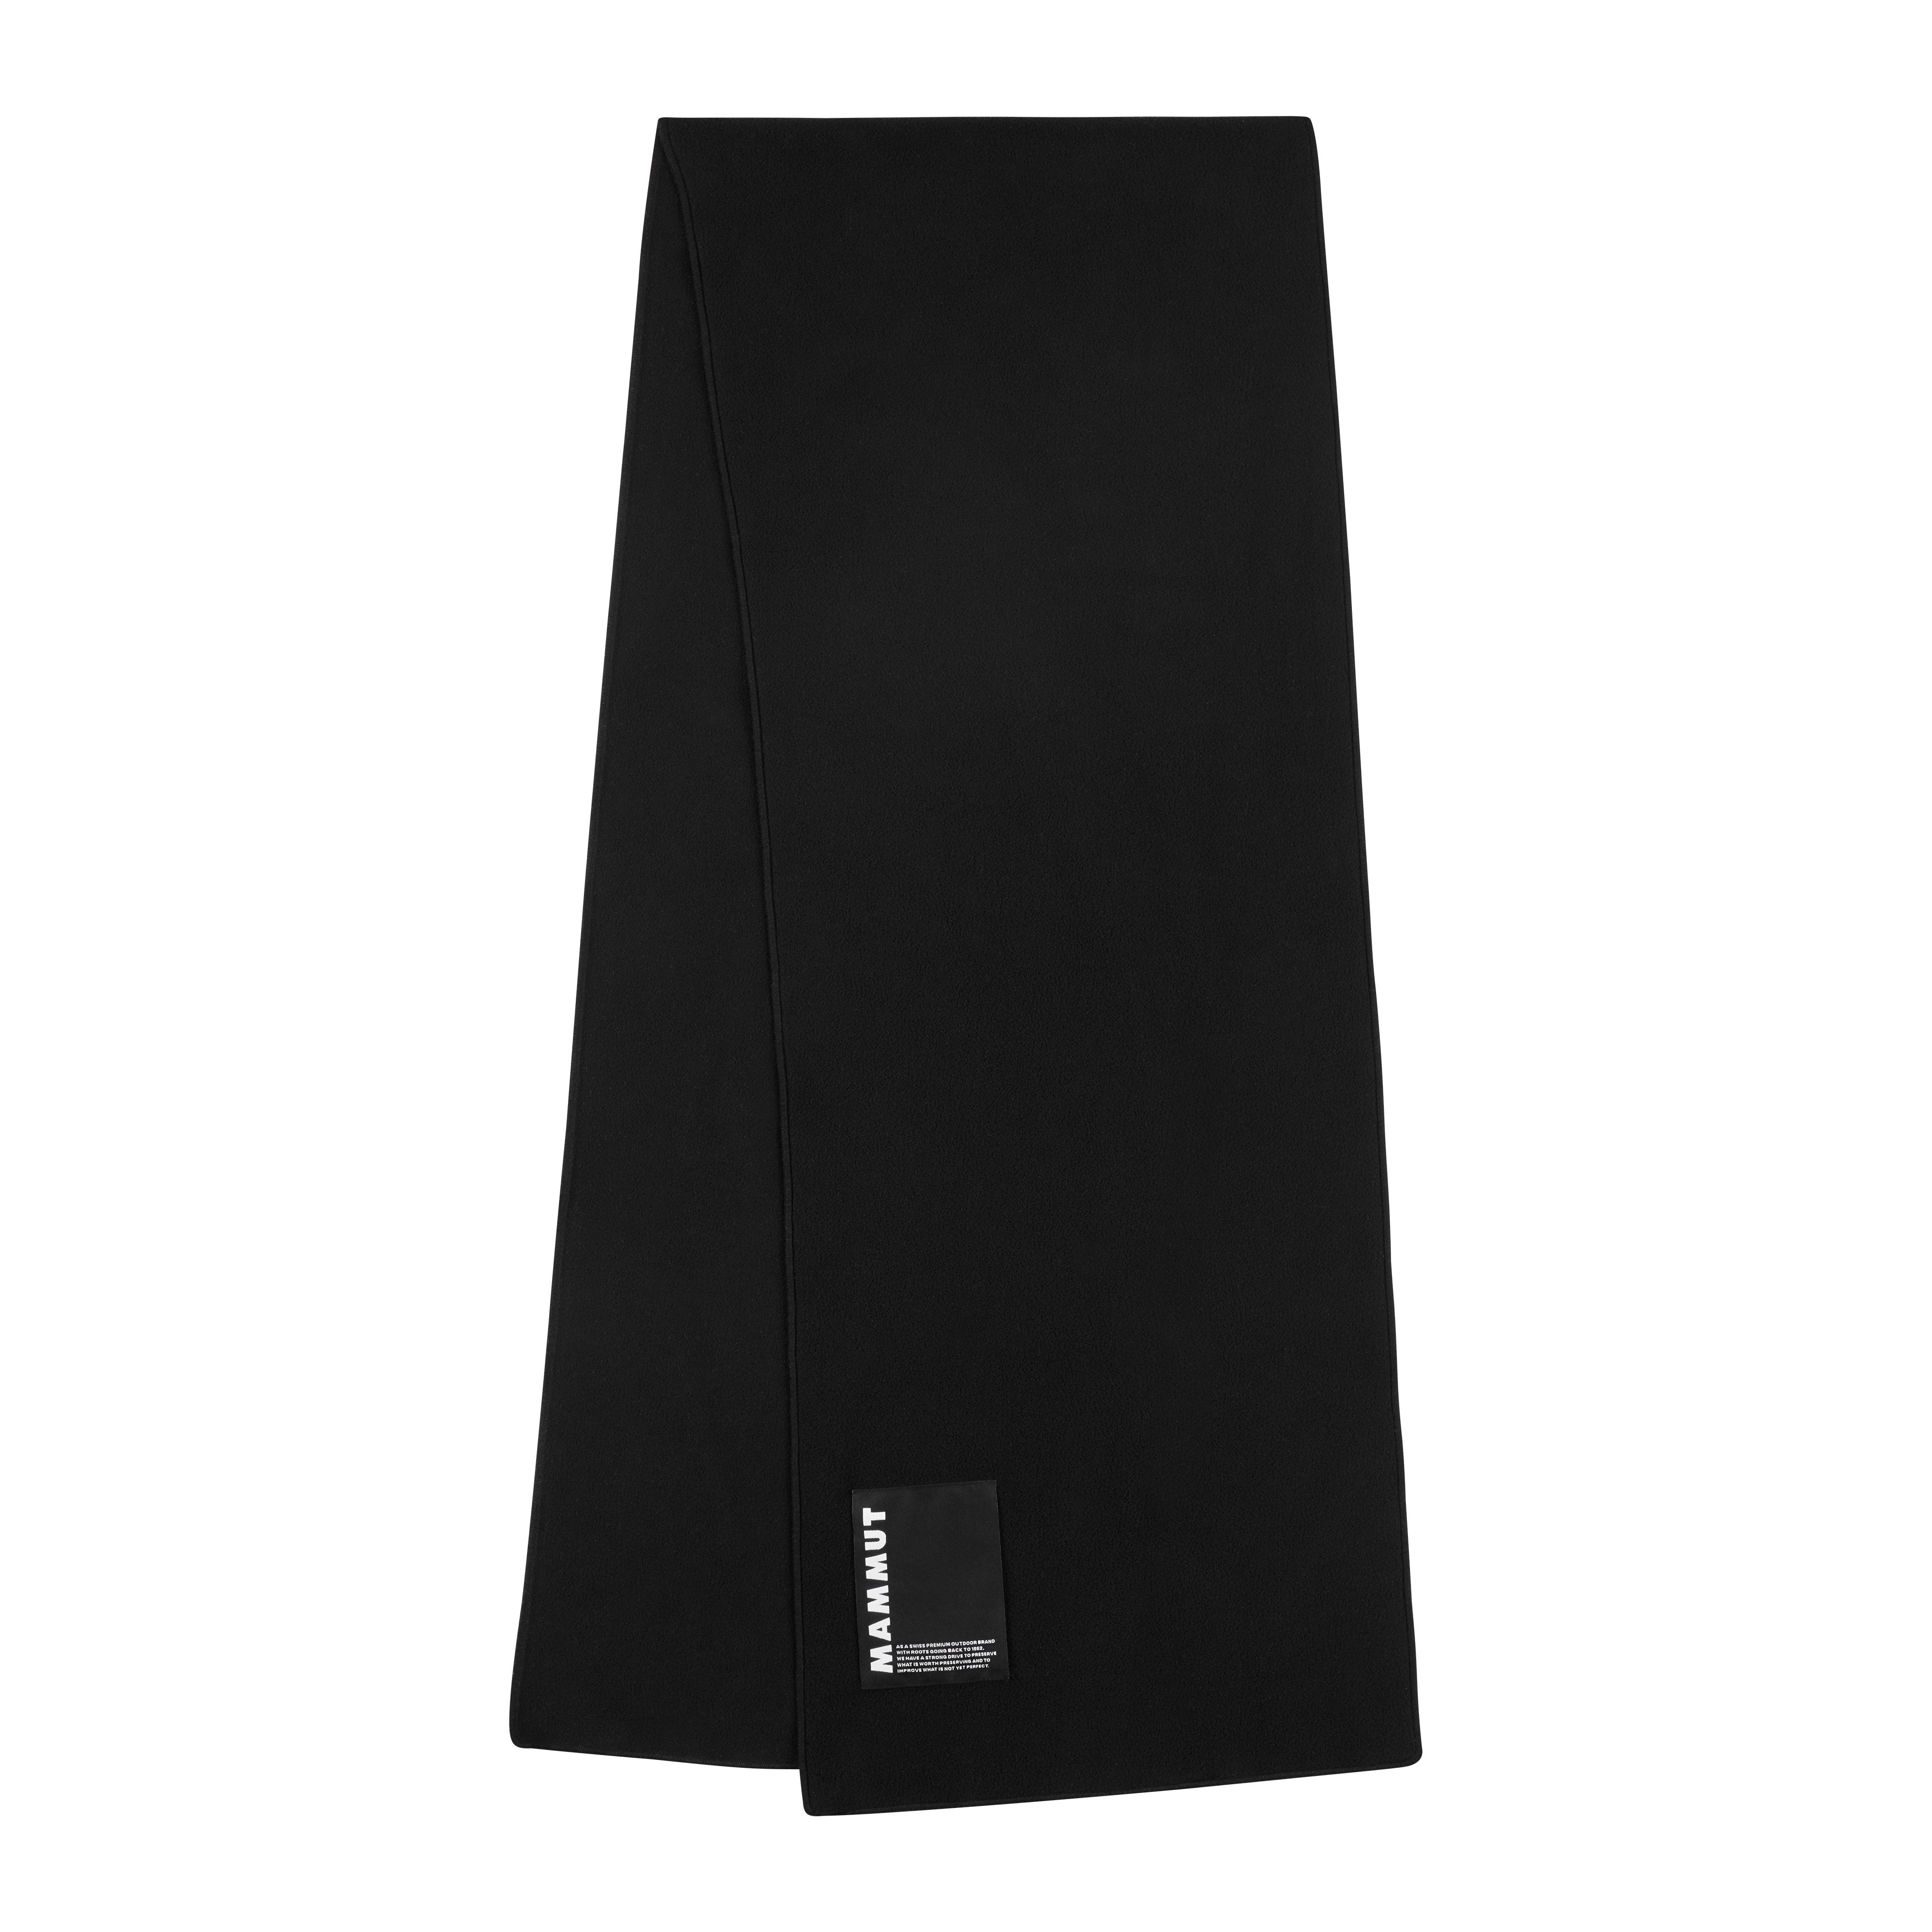 Fleece Scarf - black, one size product image